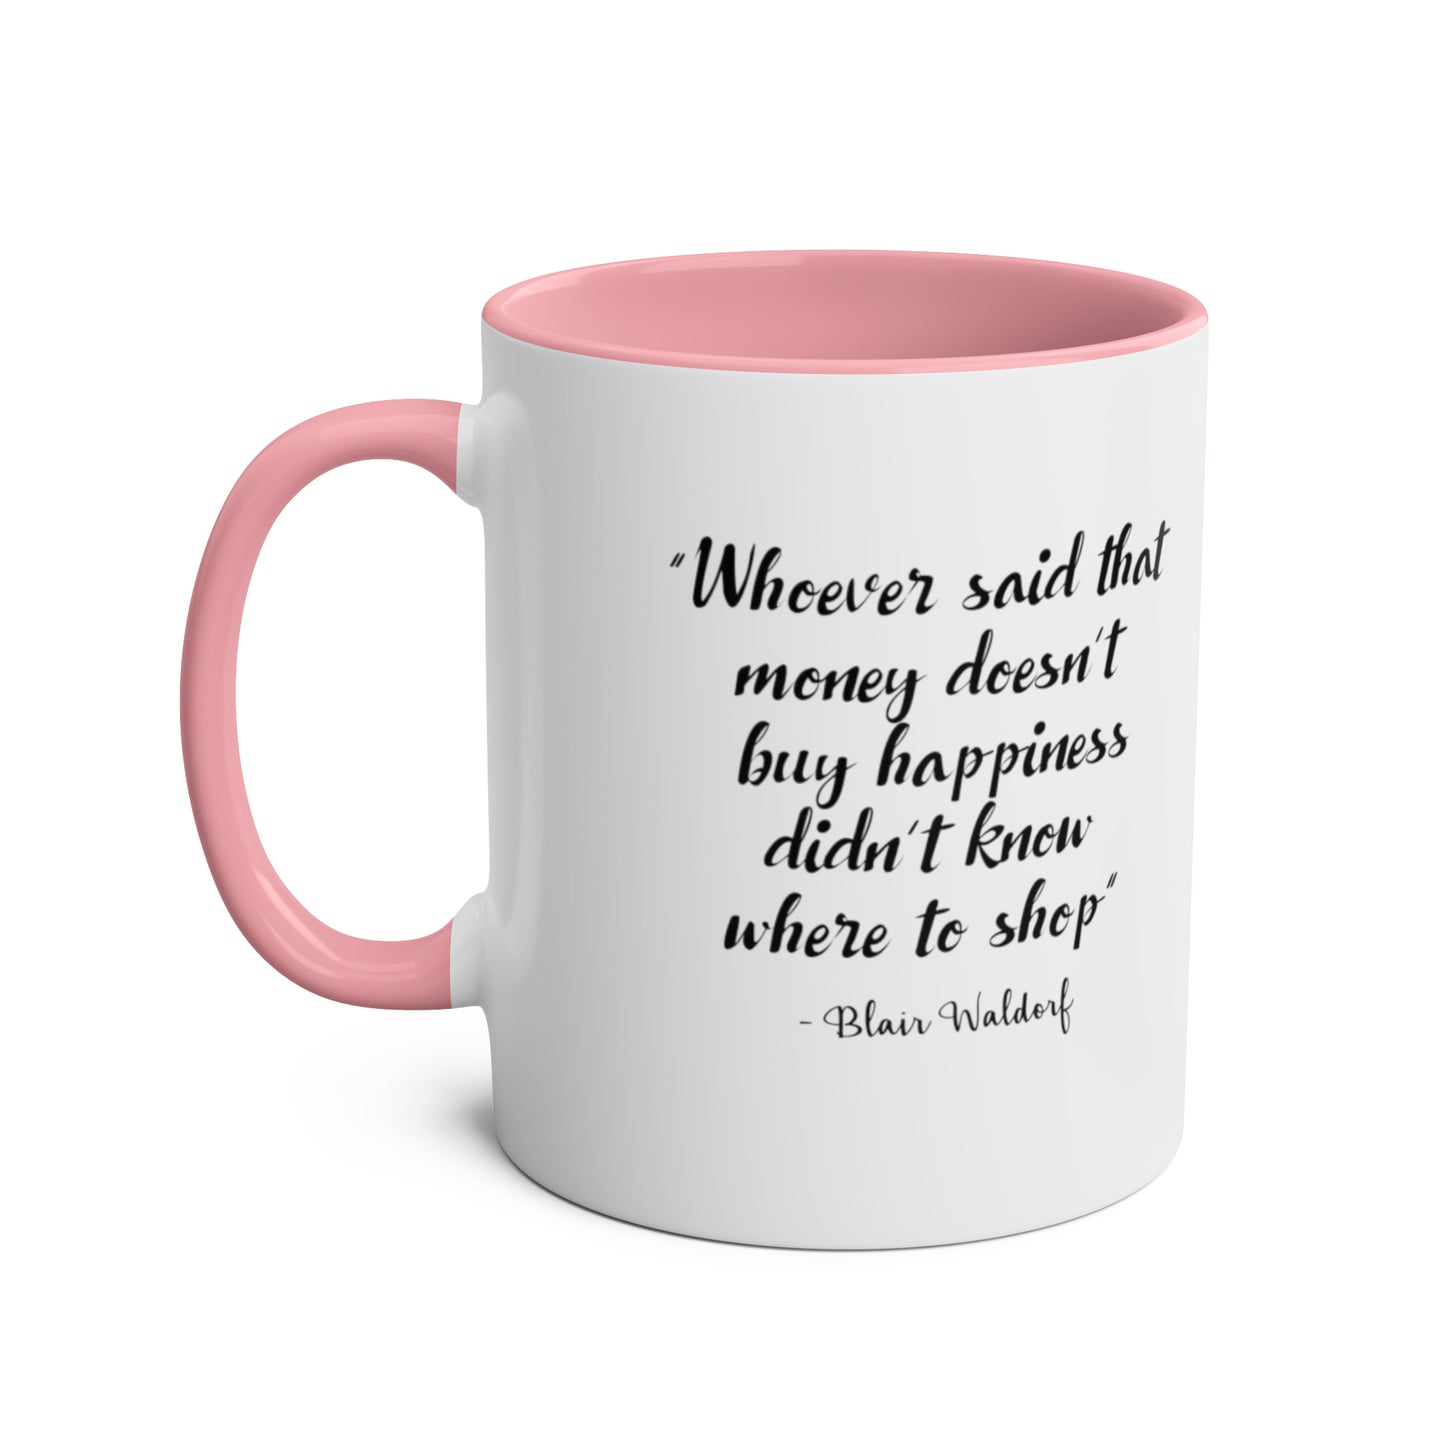 Blair Waldorf Quotes / Gossip Girl Mug